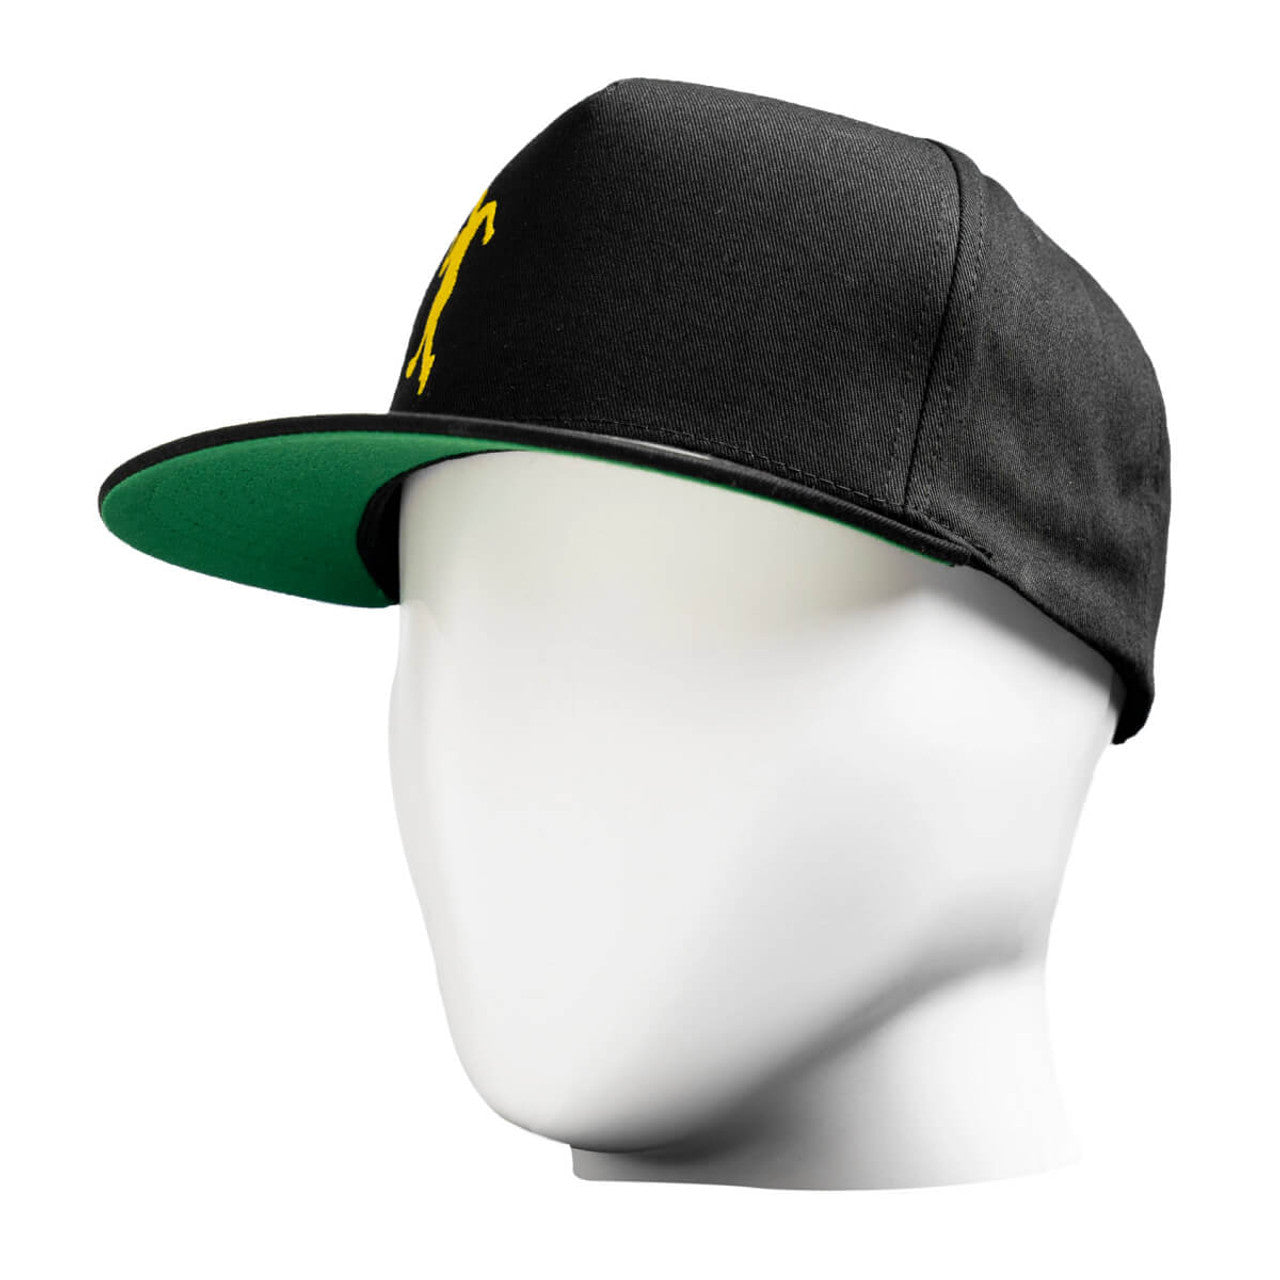 5-hour ENERGY Black Baseball Cap with Yellow Logo